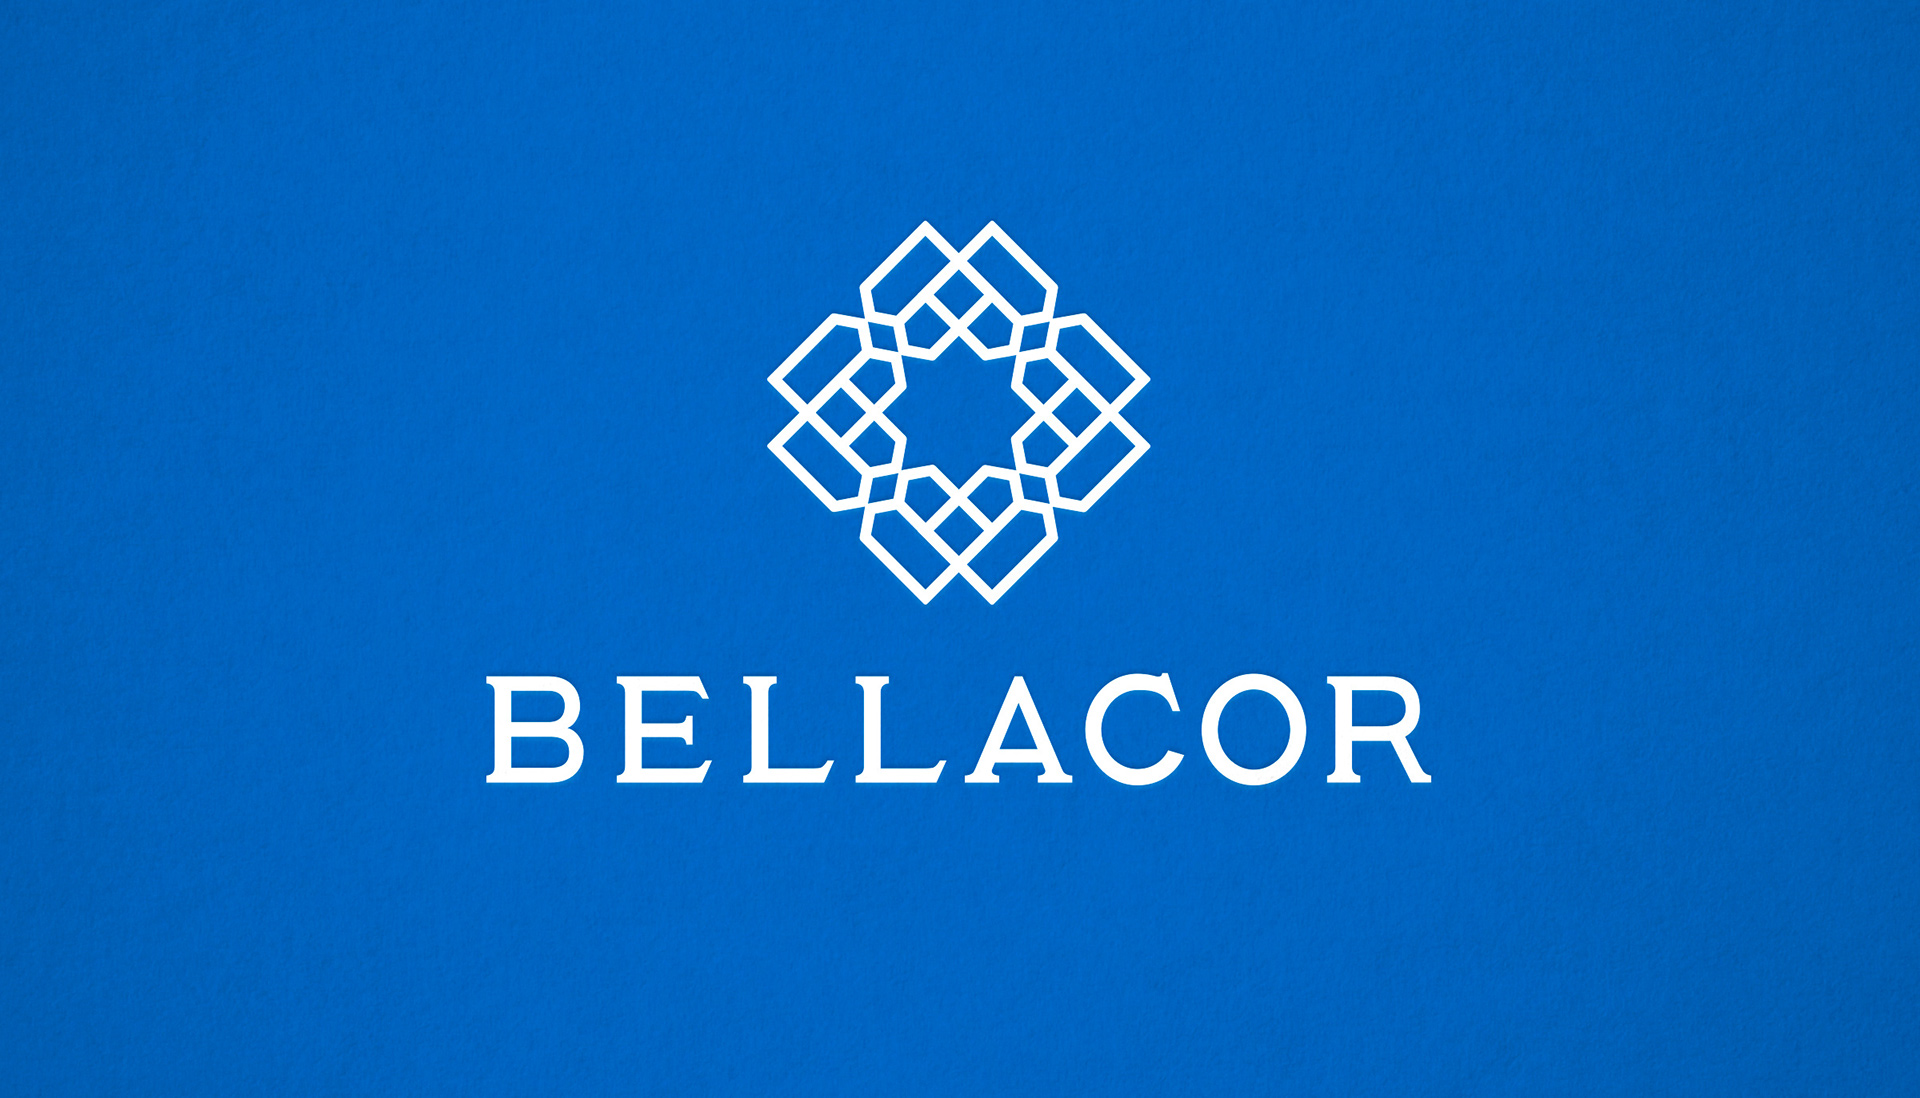 Bellacor Identity Redesign